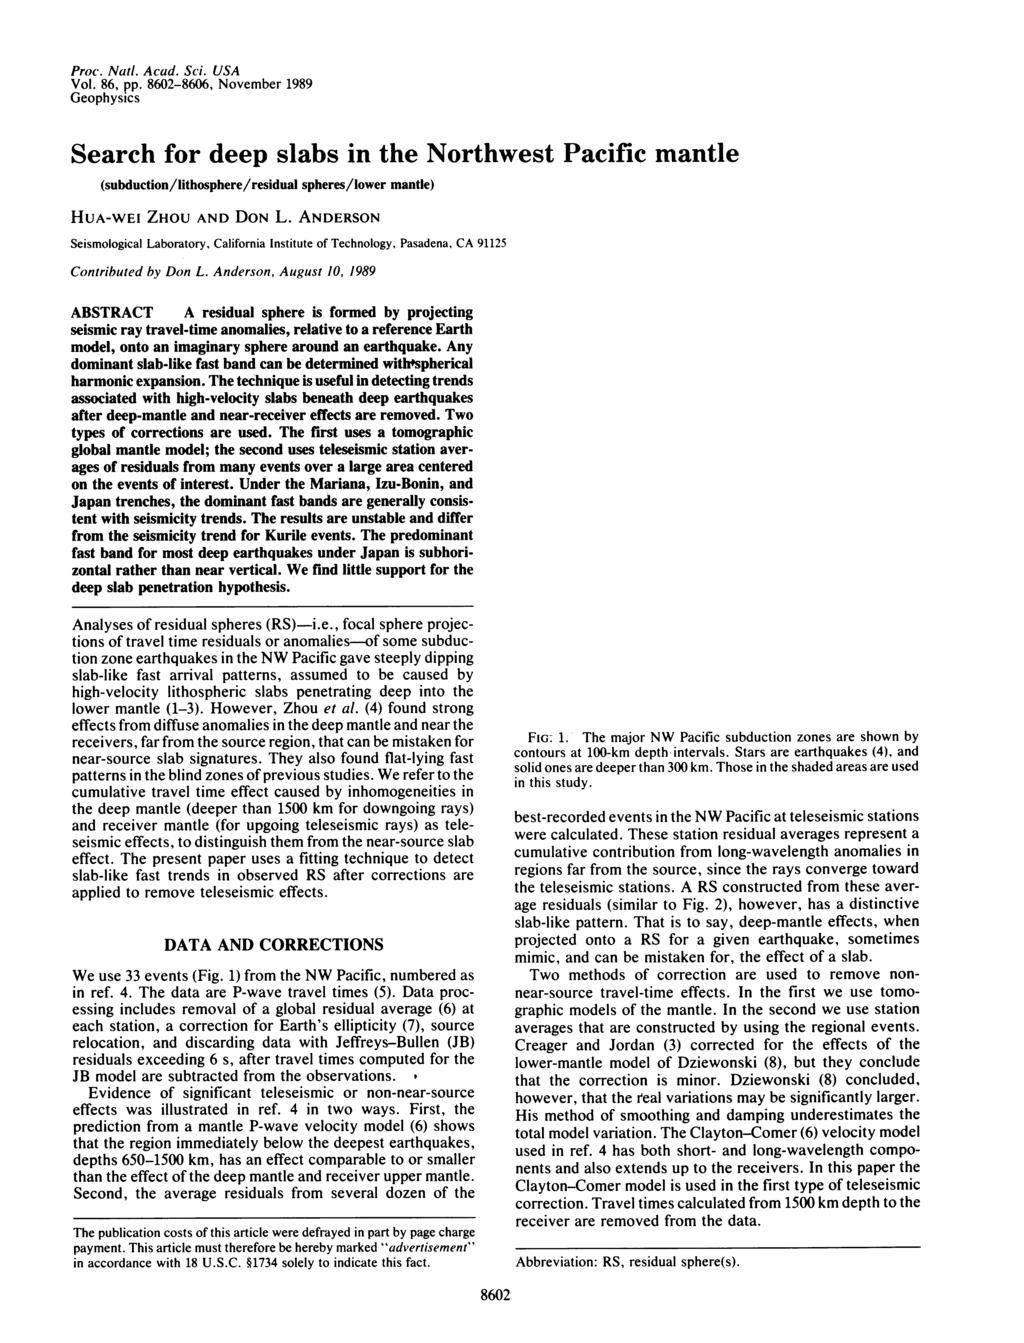 Proc. Nati. Acad. Sci. USA Vol. 86, pp.